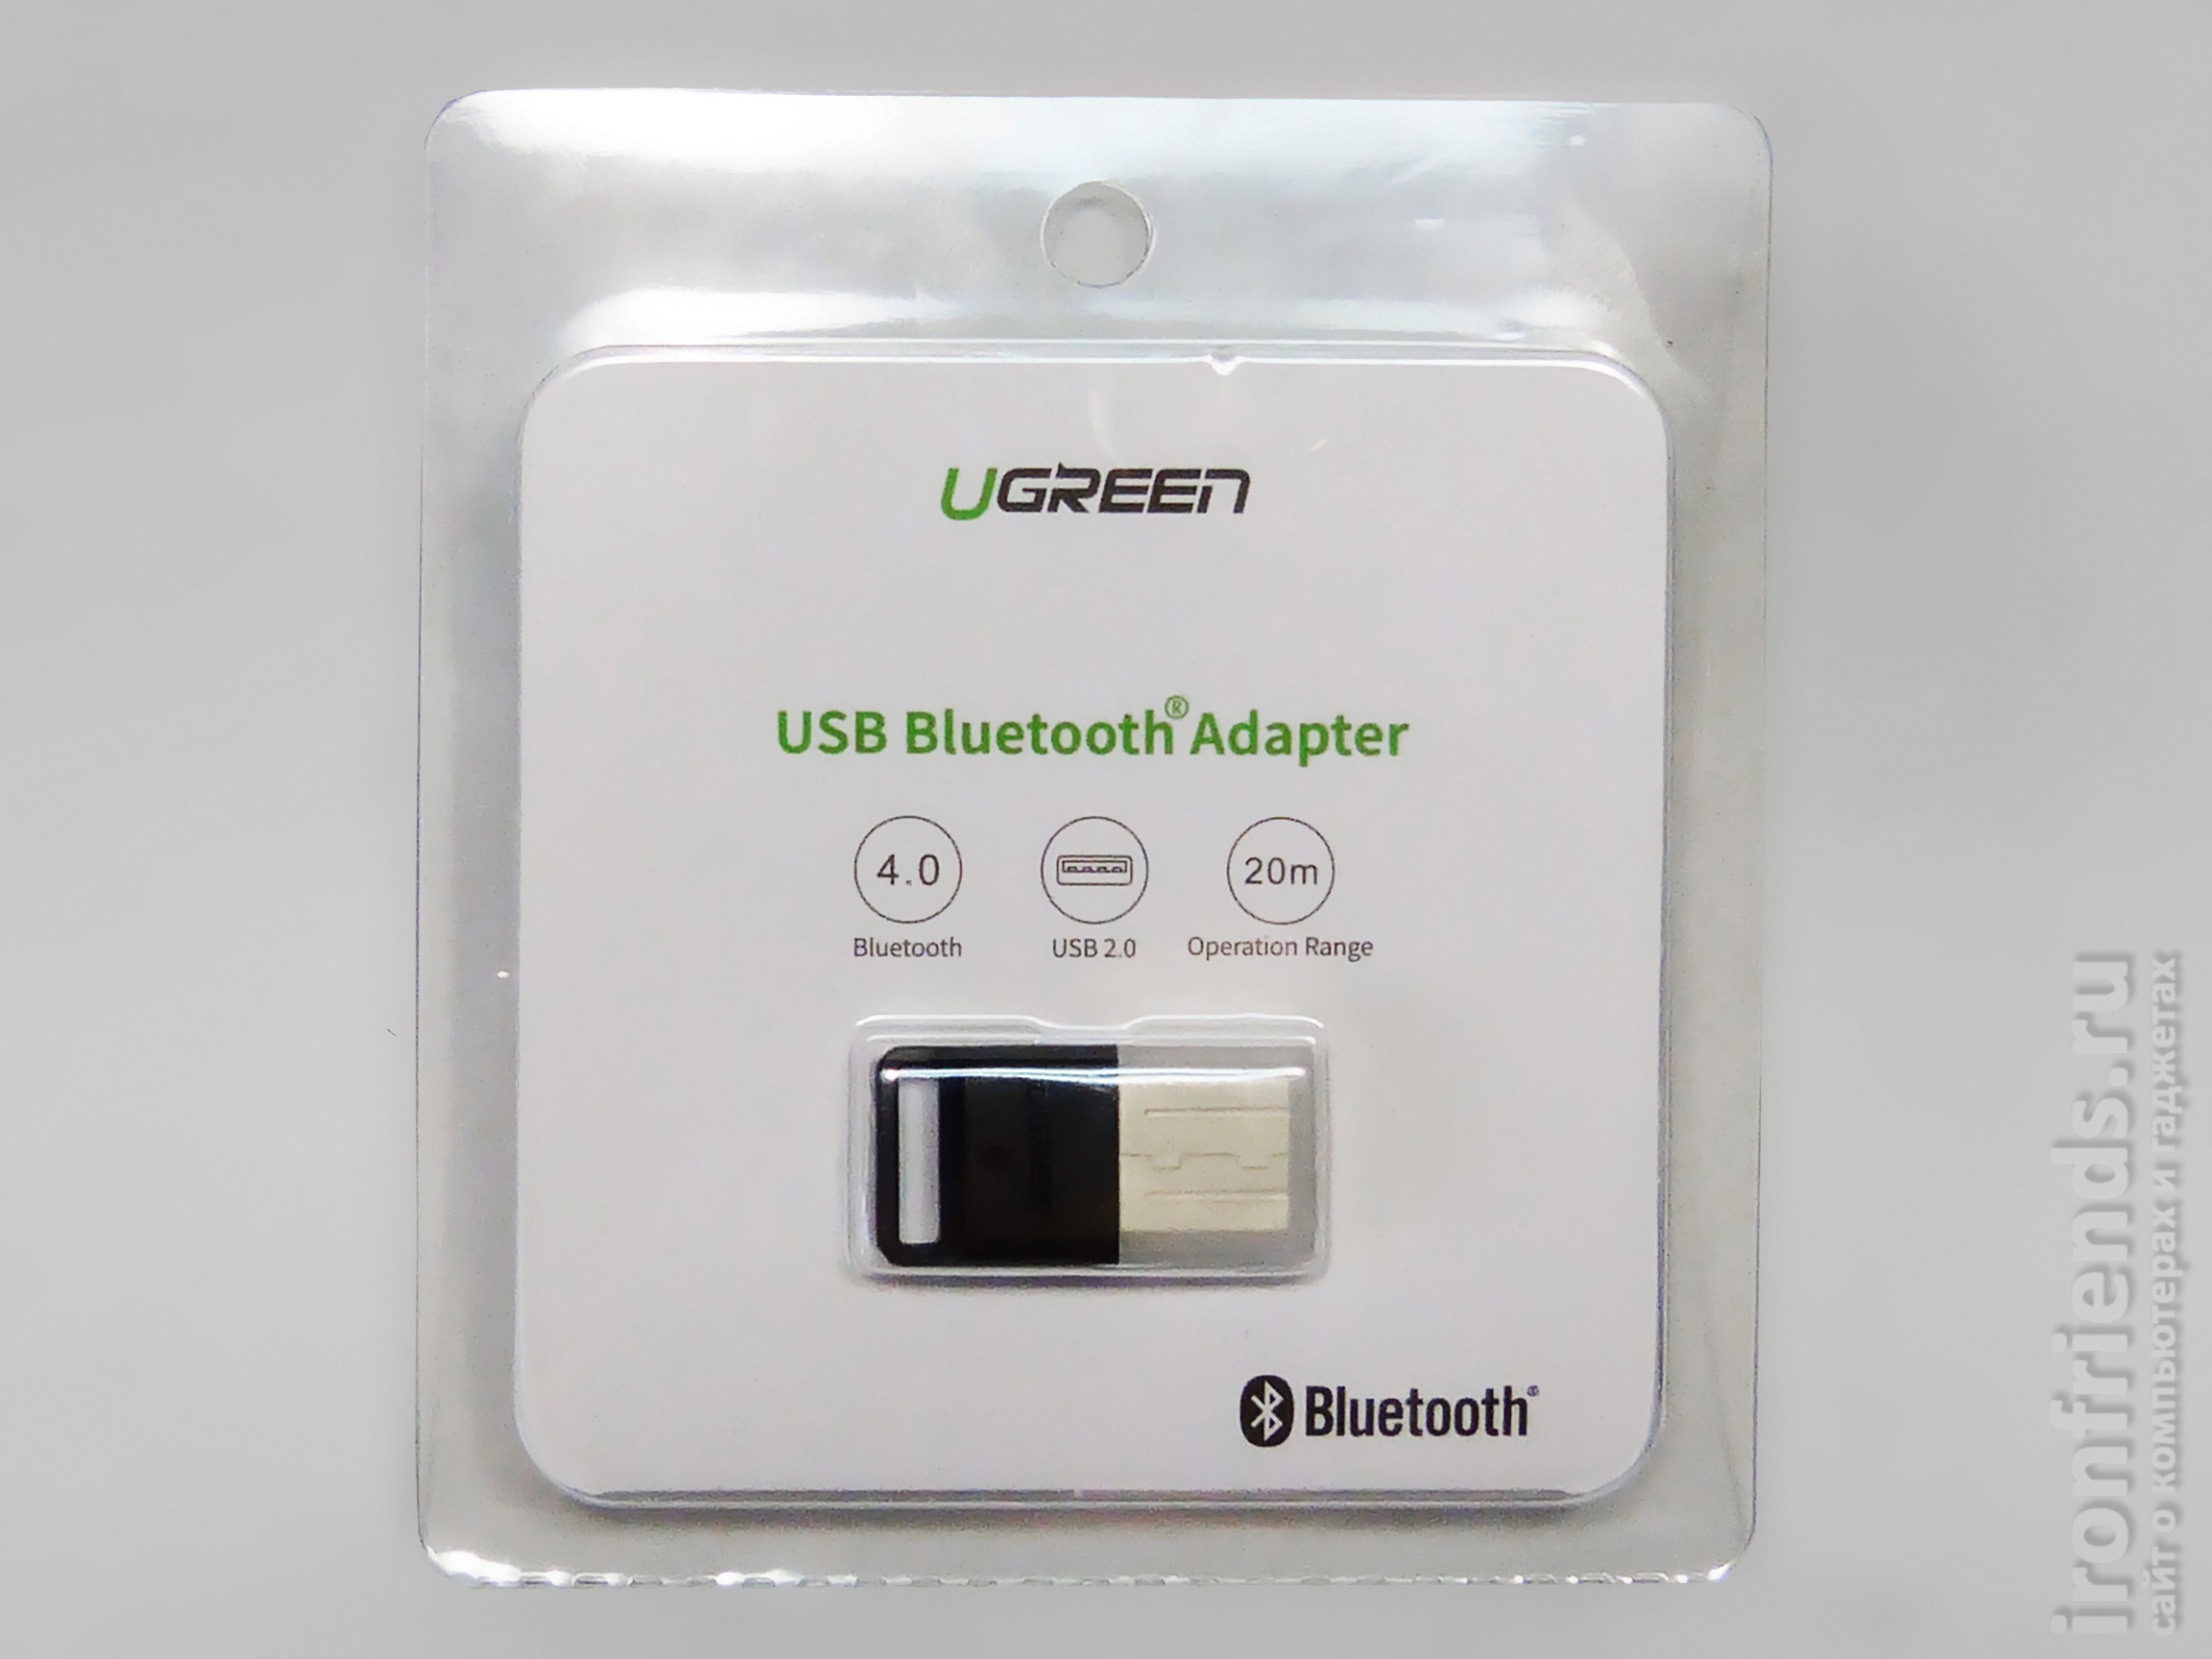 UGREEN USB Bluetooth 4.0 Adapter (30524)